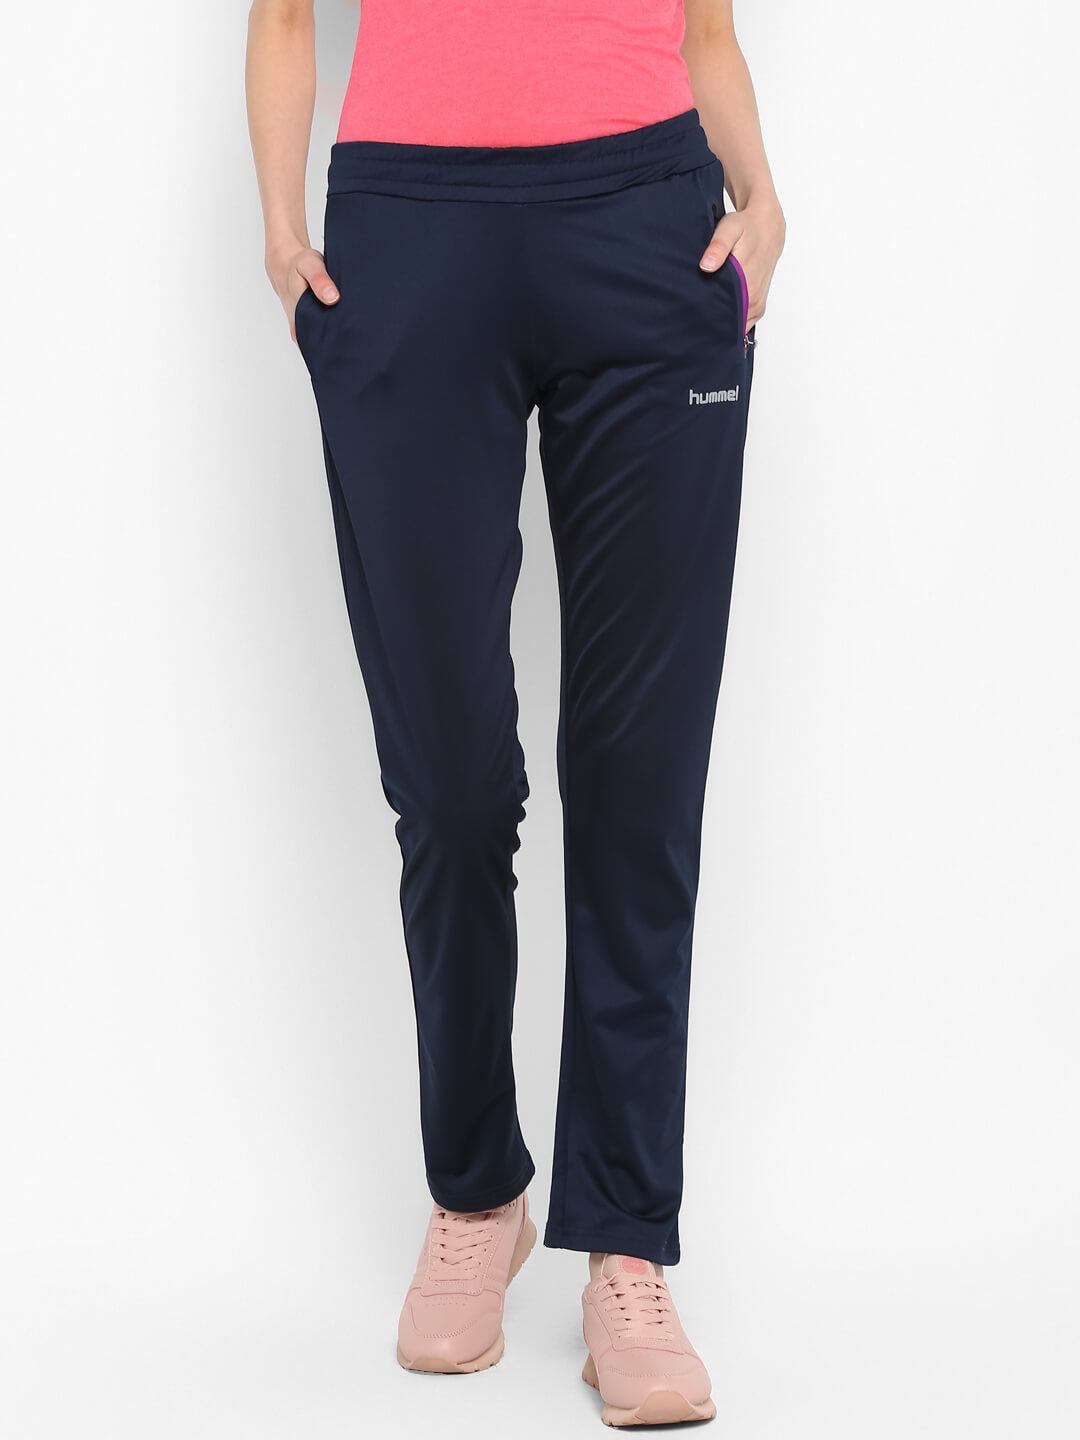 Baleaf Polyester Athletic Pants for Women